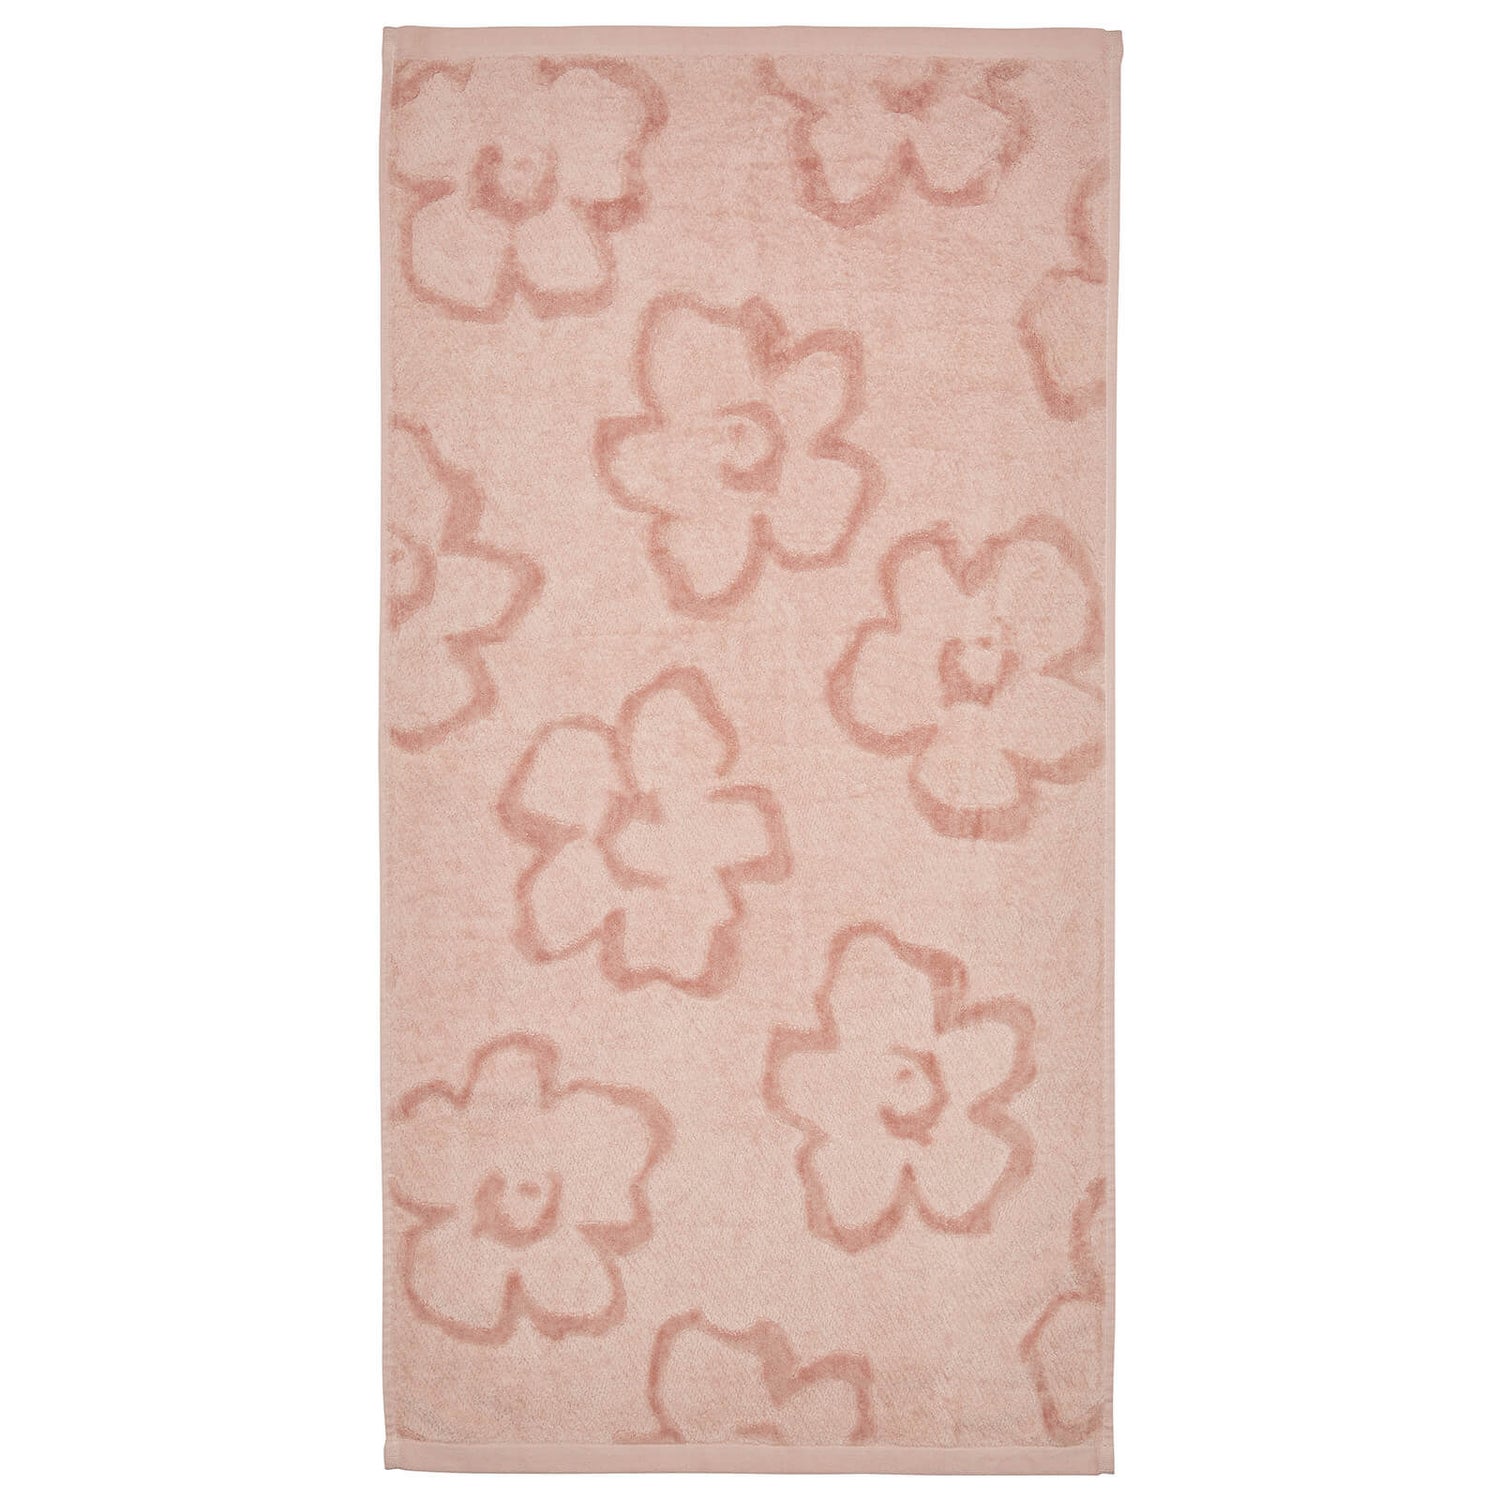 Ted Baker Magnolia Towel - Pink - Hand